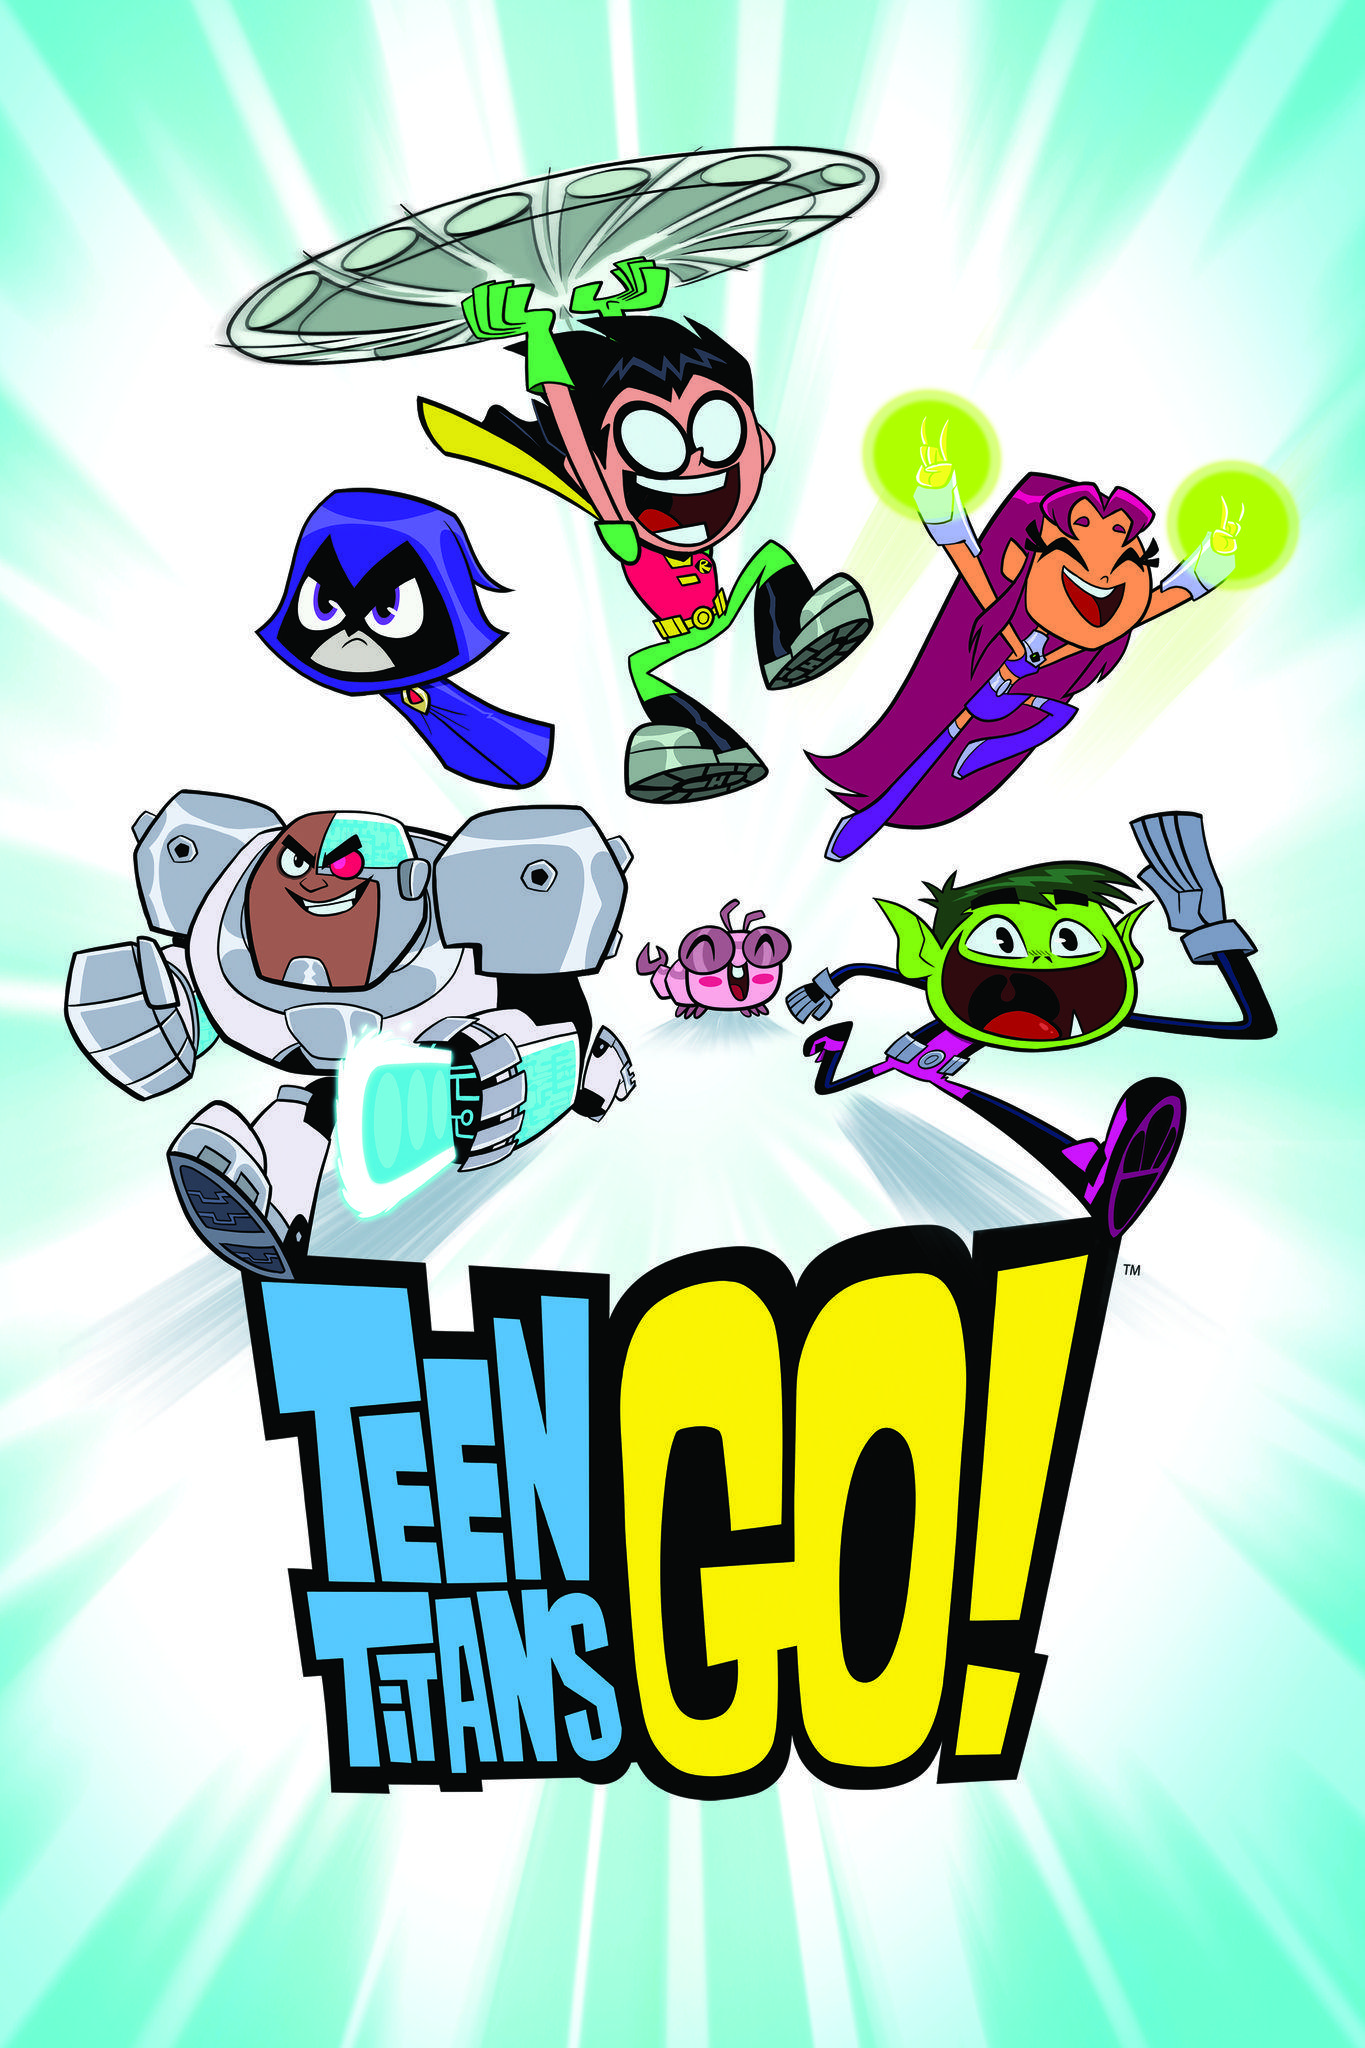 Teen Titans Go! (TV Series 2013– )Pro